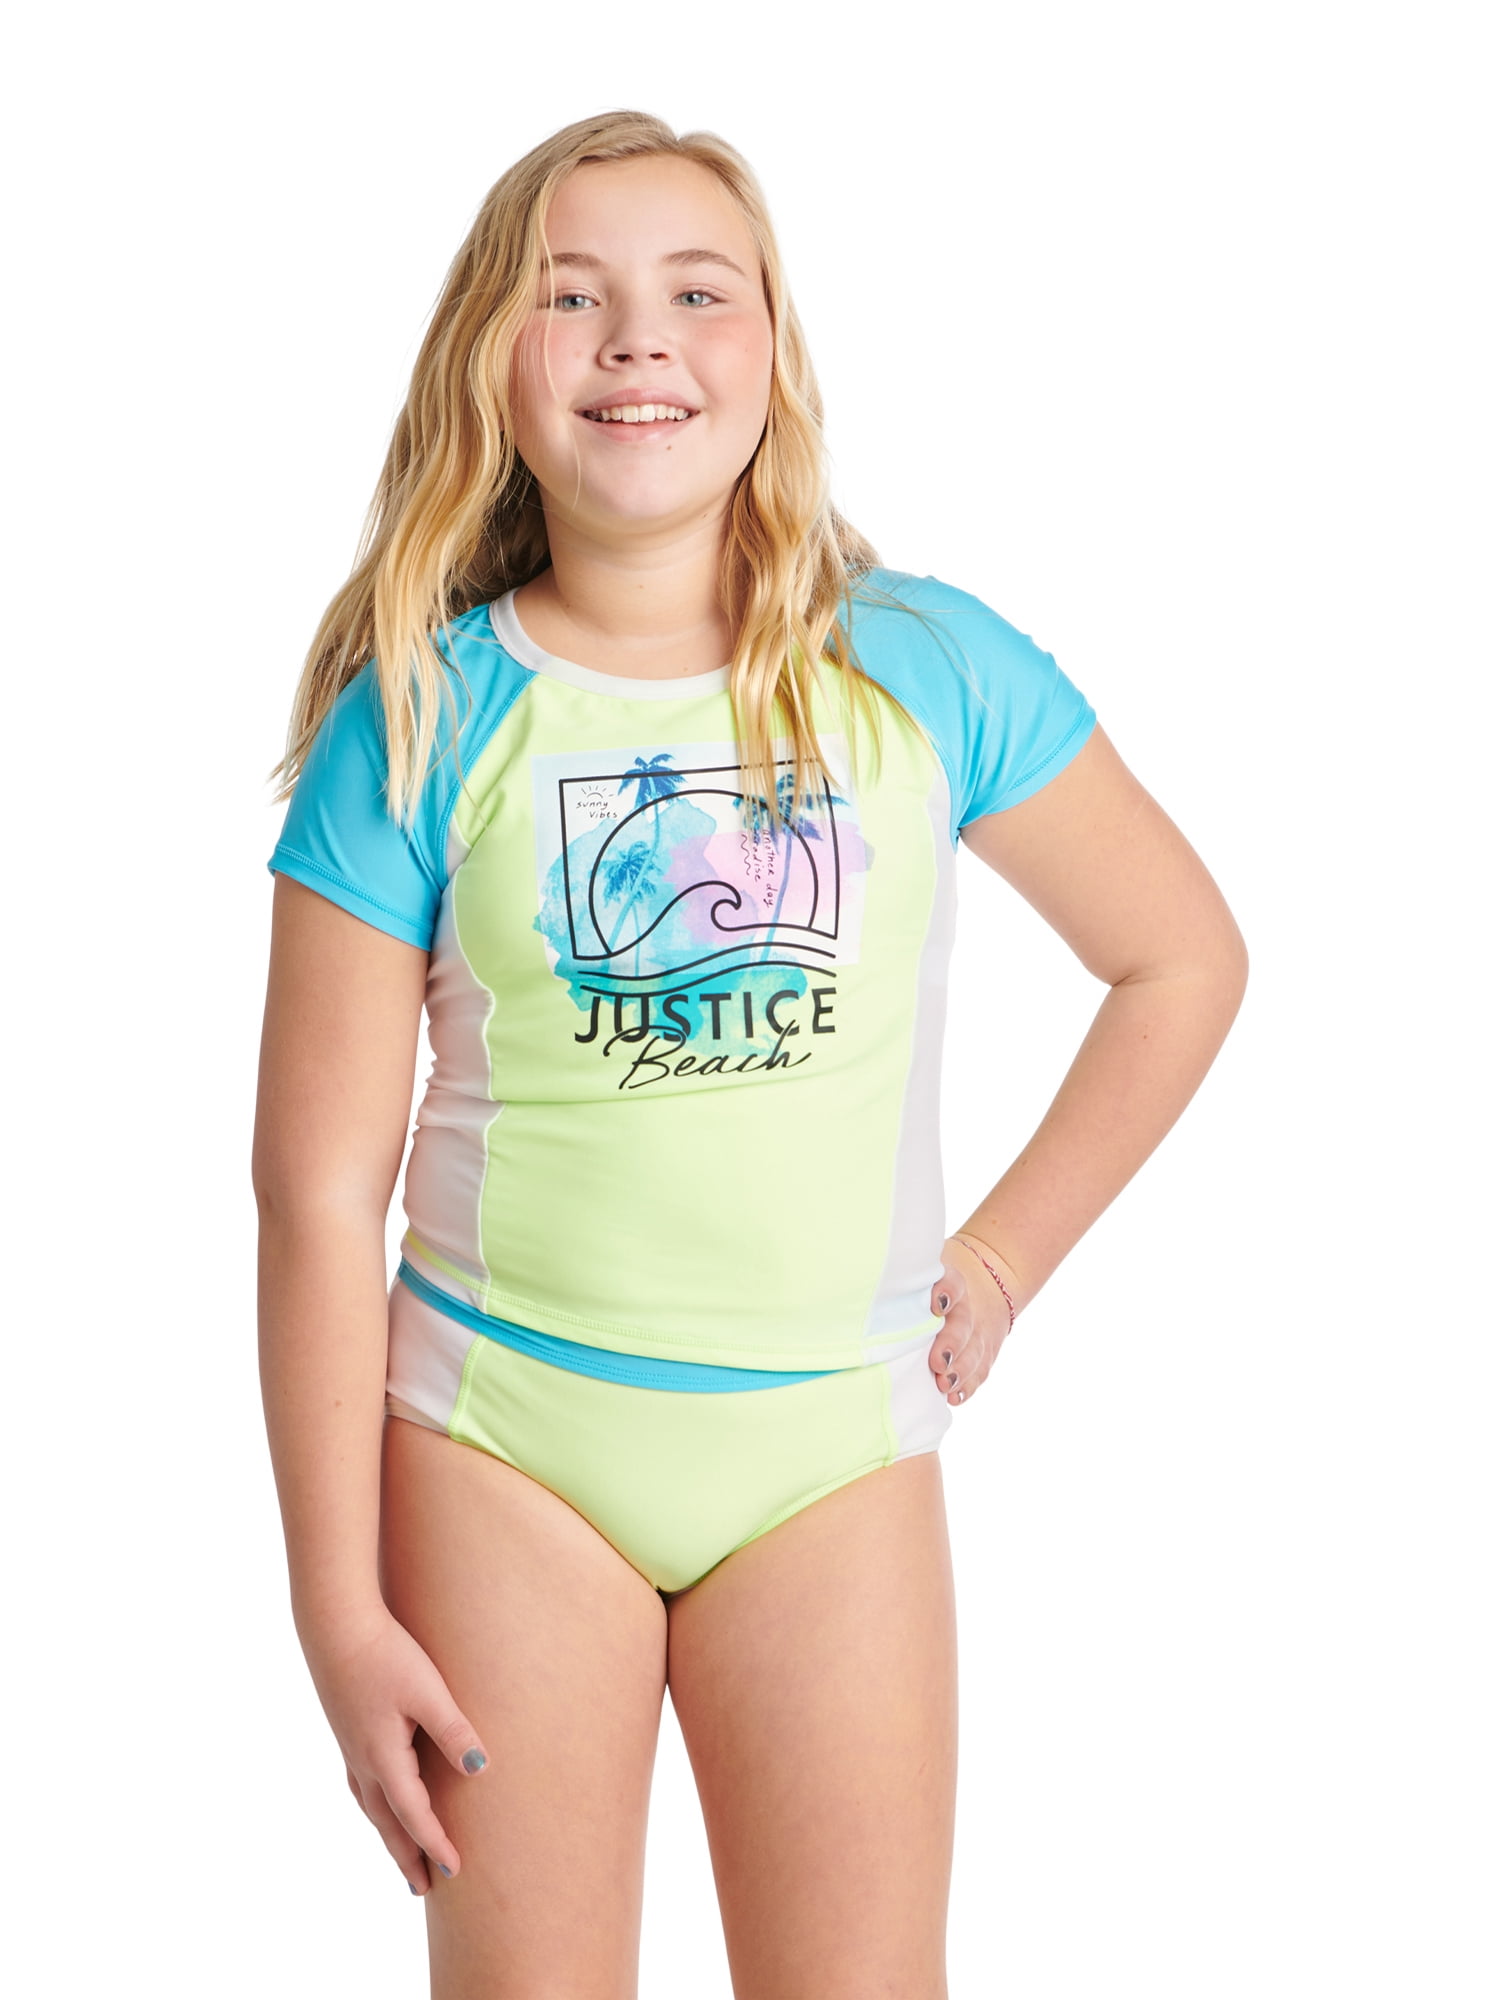 XLarge 16 Girls Speedo Rashguard Shirt Large 14 - Small 7-8 Swim; UV50+ New